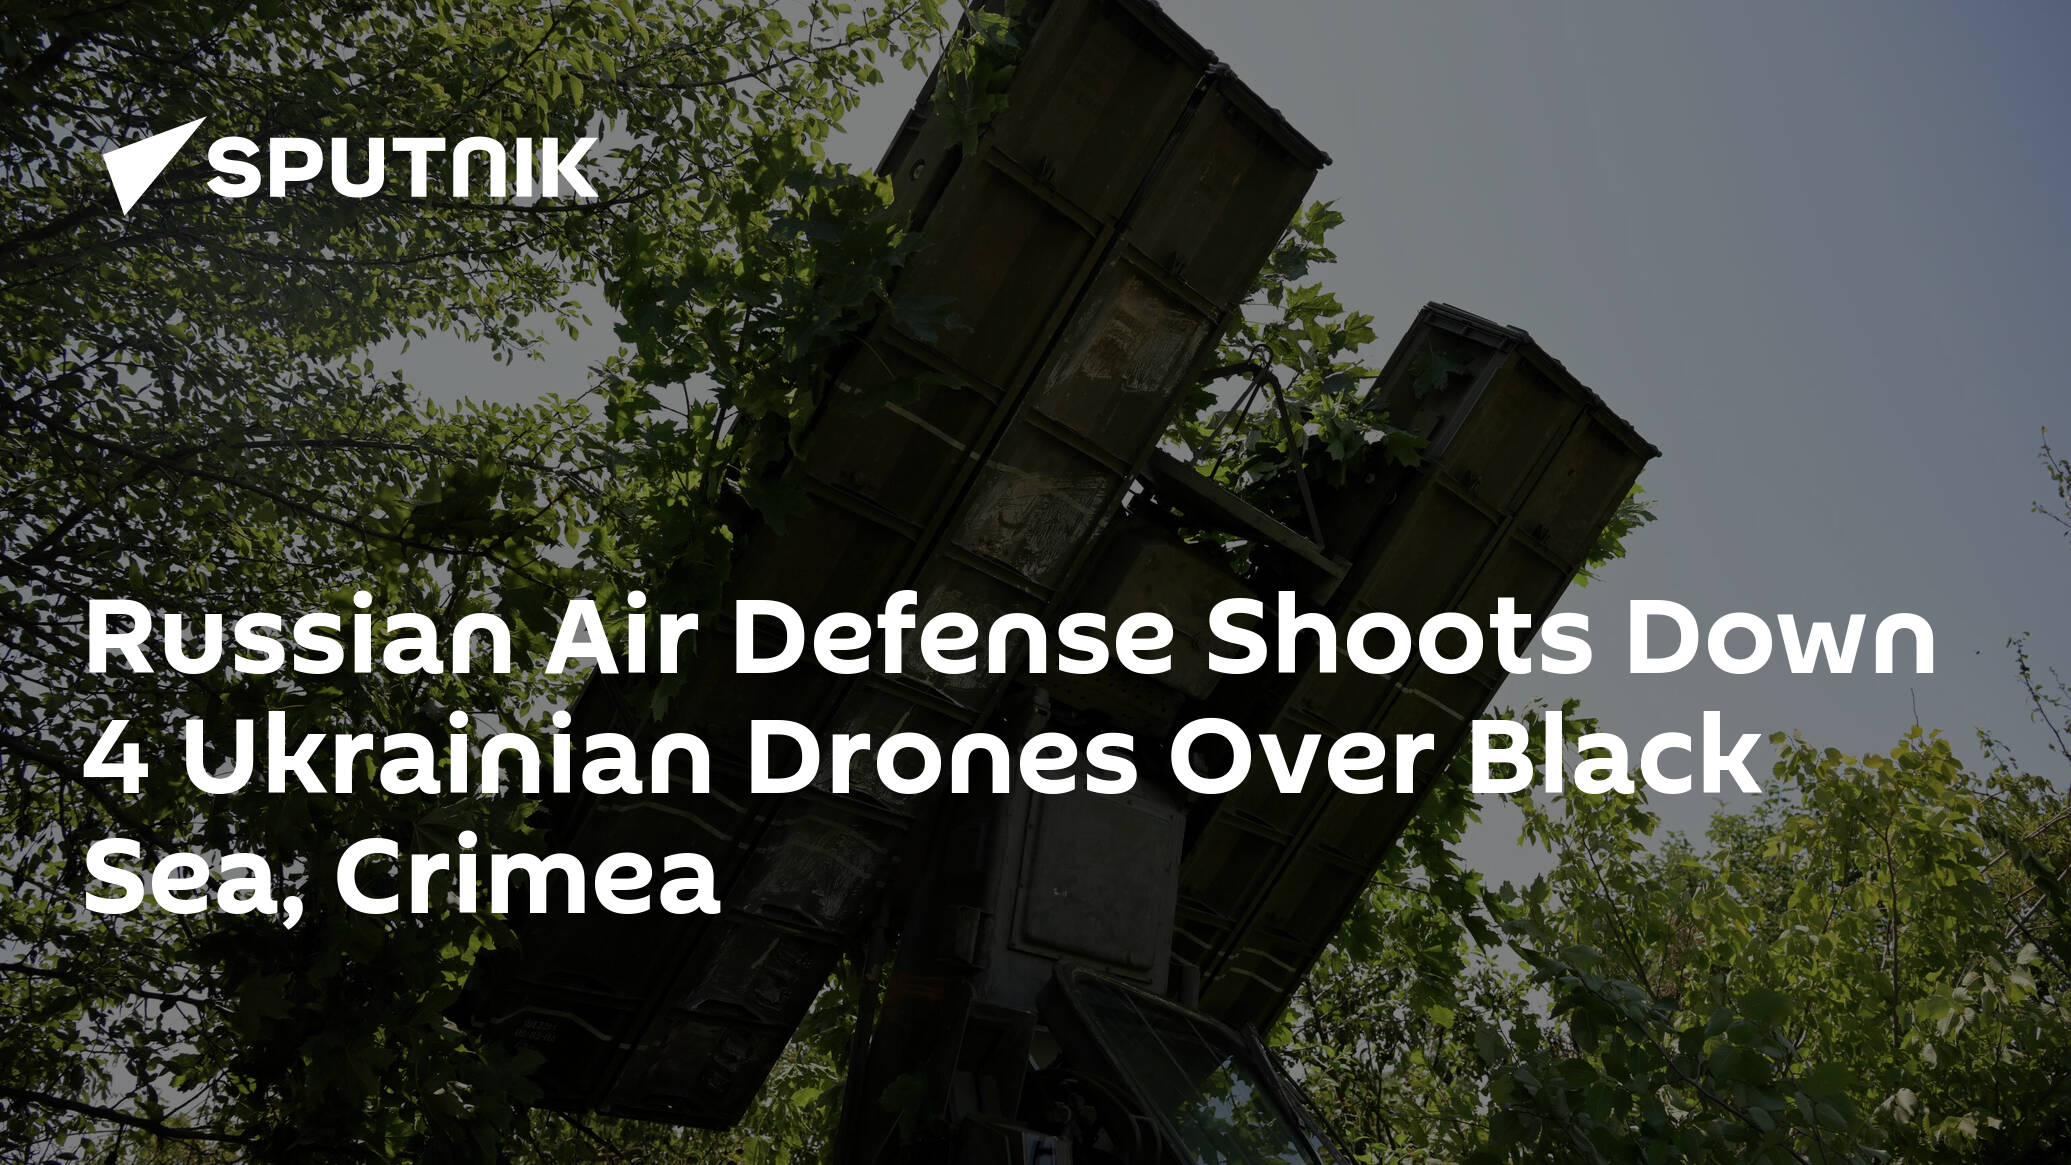 Russian Air Defense Shoots Down 4 Ukrainian Drones Over Black Sea, Crimea